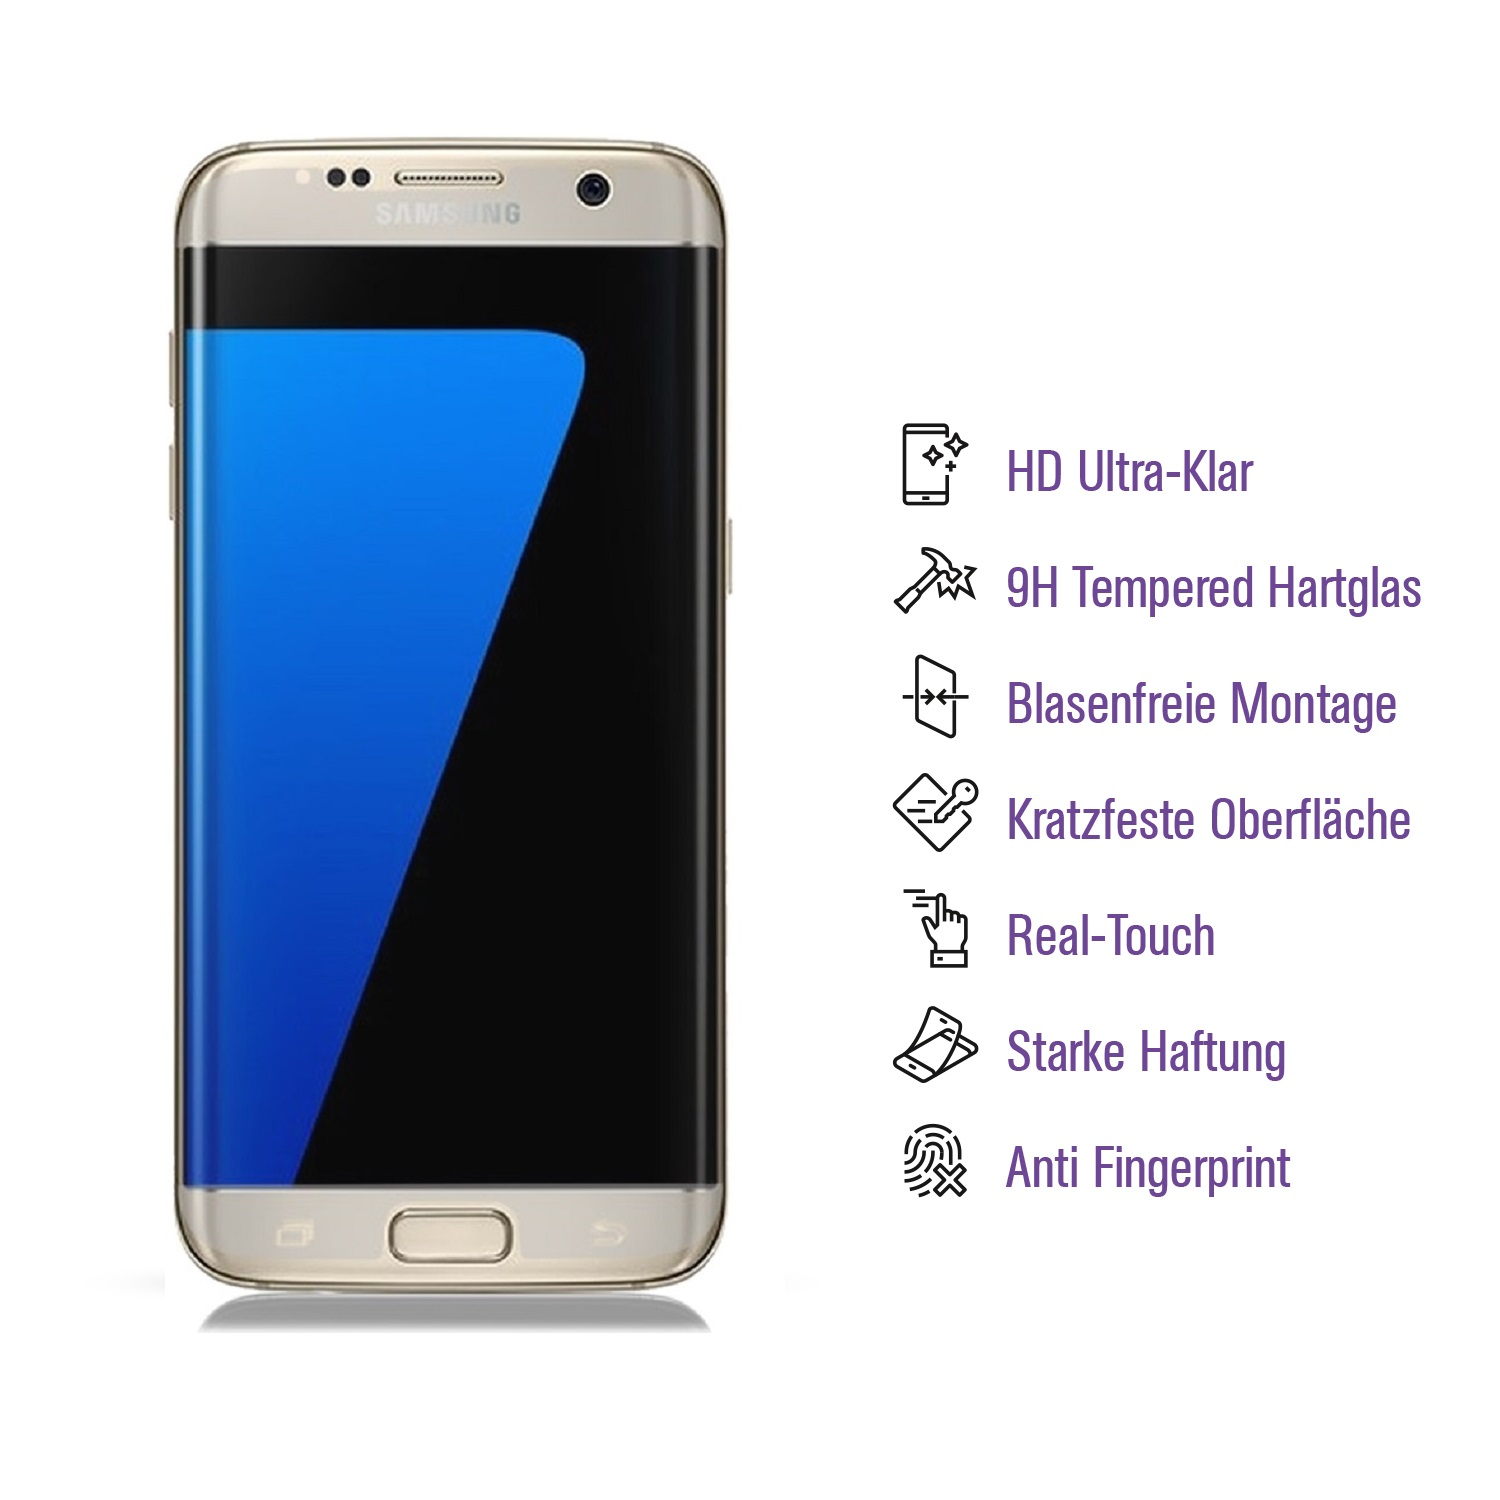 PROTECTORKING 2x UV FULL CURVED KLAR Hartglas Samsung Galaxy 3D 9H Schutzglas Edge) Displayschutzfolie(für S7